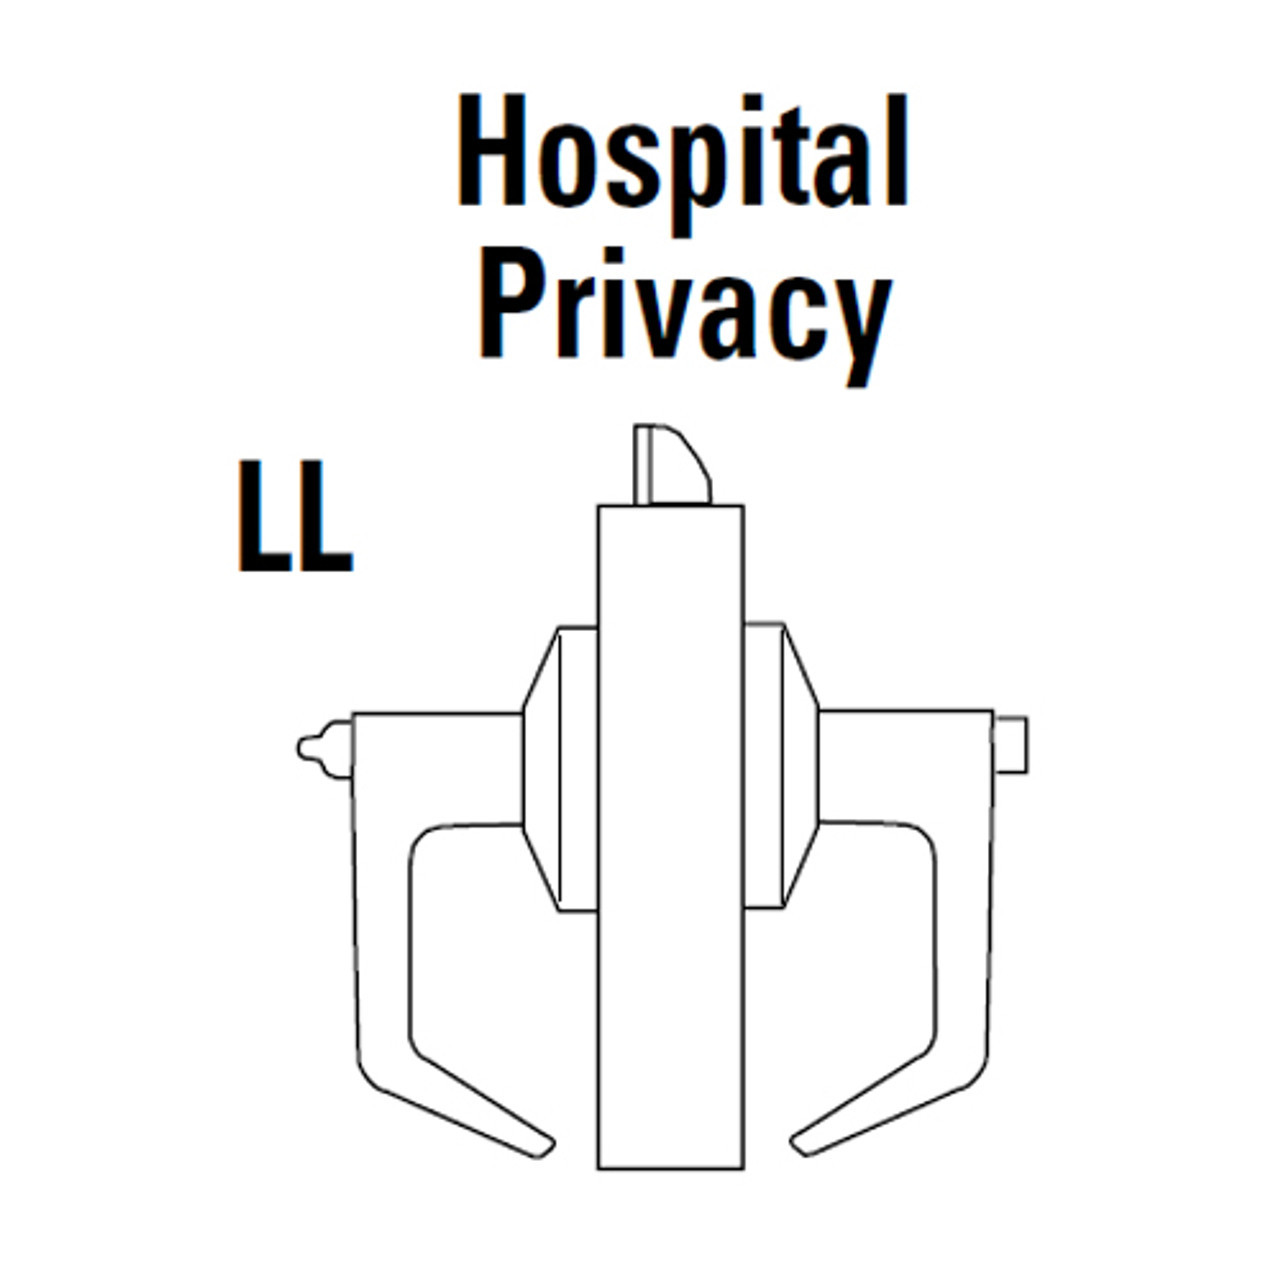 9K30LL14DSTK622LM Best 9K Series Hospital Privacy Heavy Duty Cylindrical Lever Locks in Black